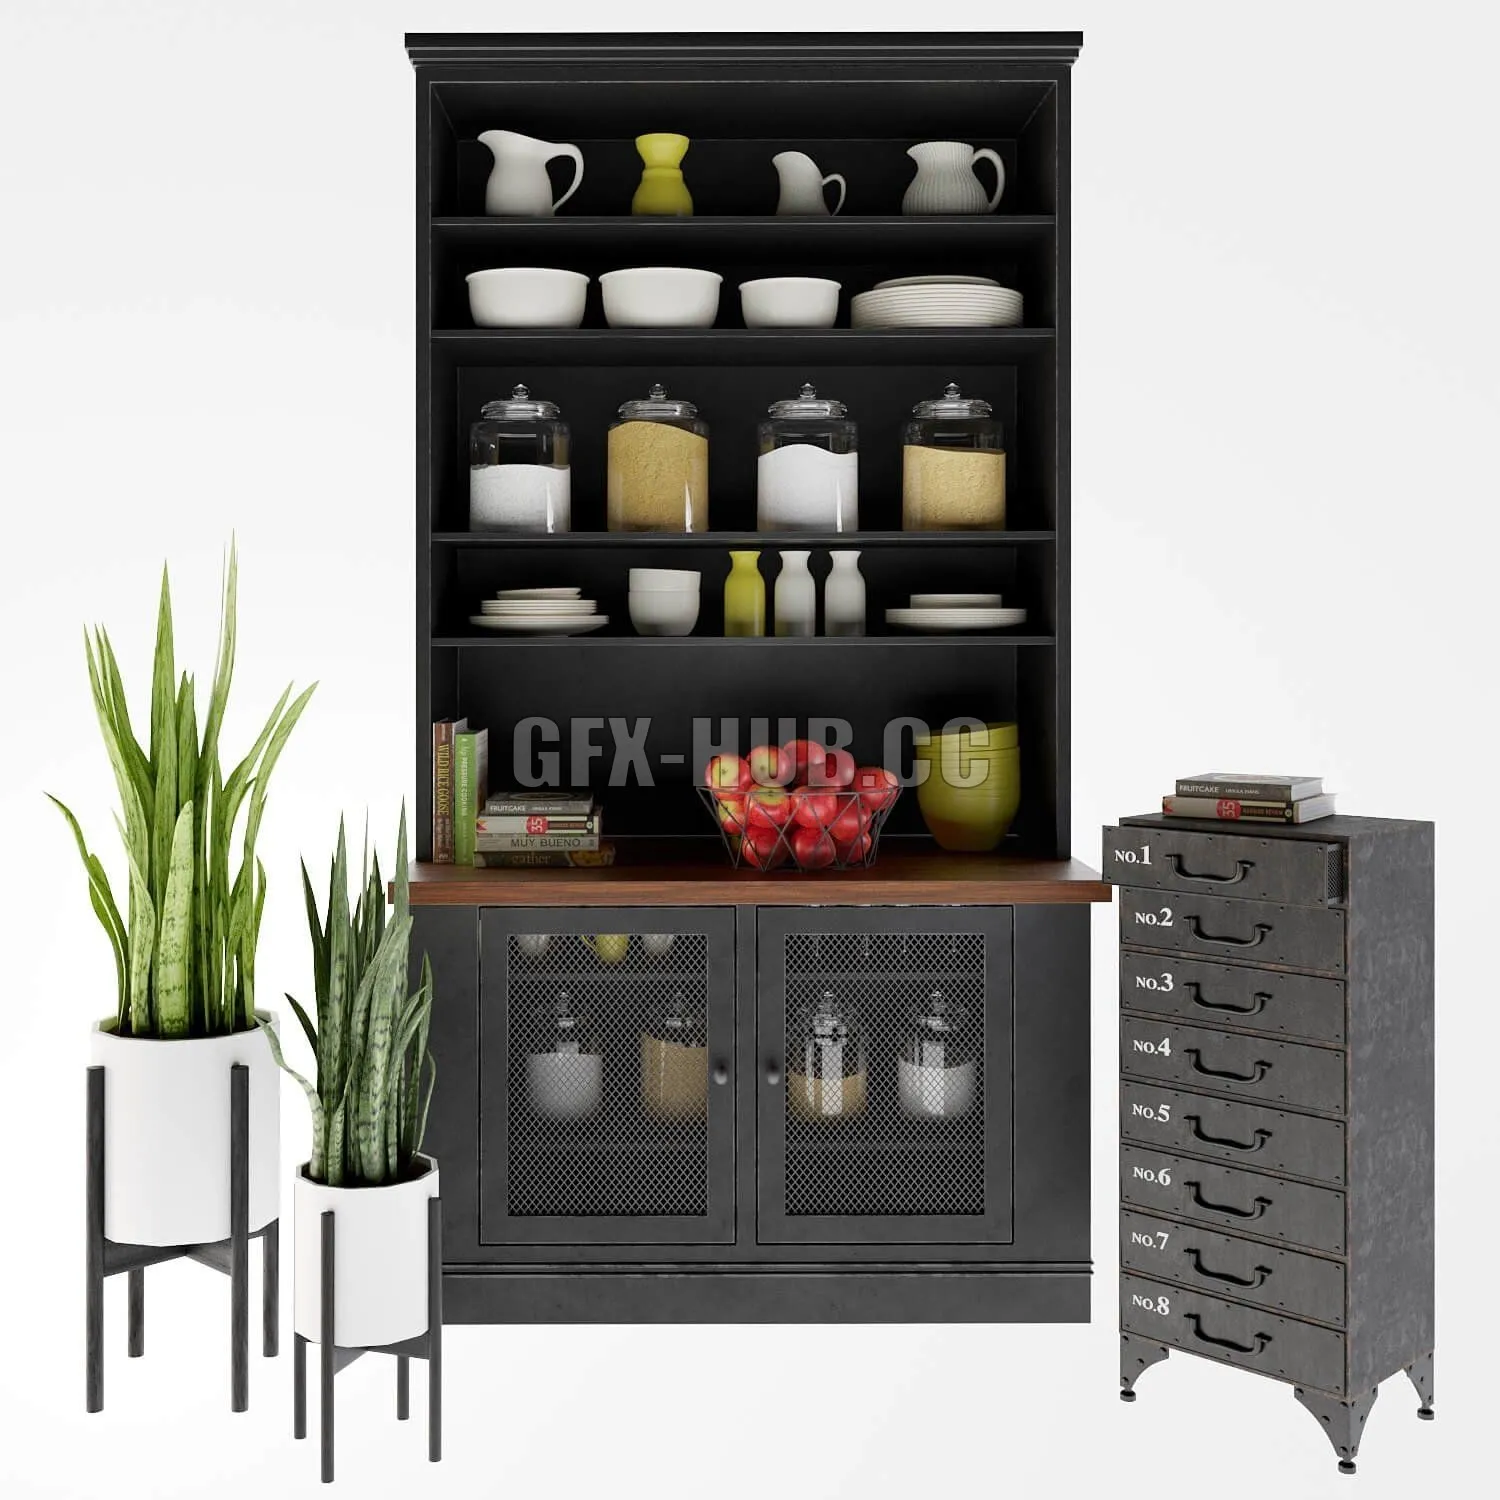 KITCHEN D-COR – Industrial Loft Rustic Iron 8 drawer dresser and kitchen decor set